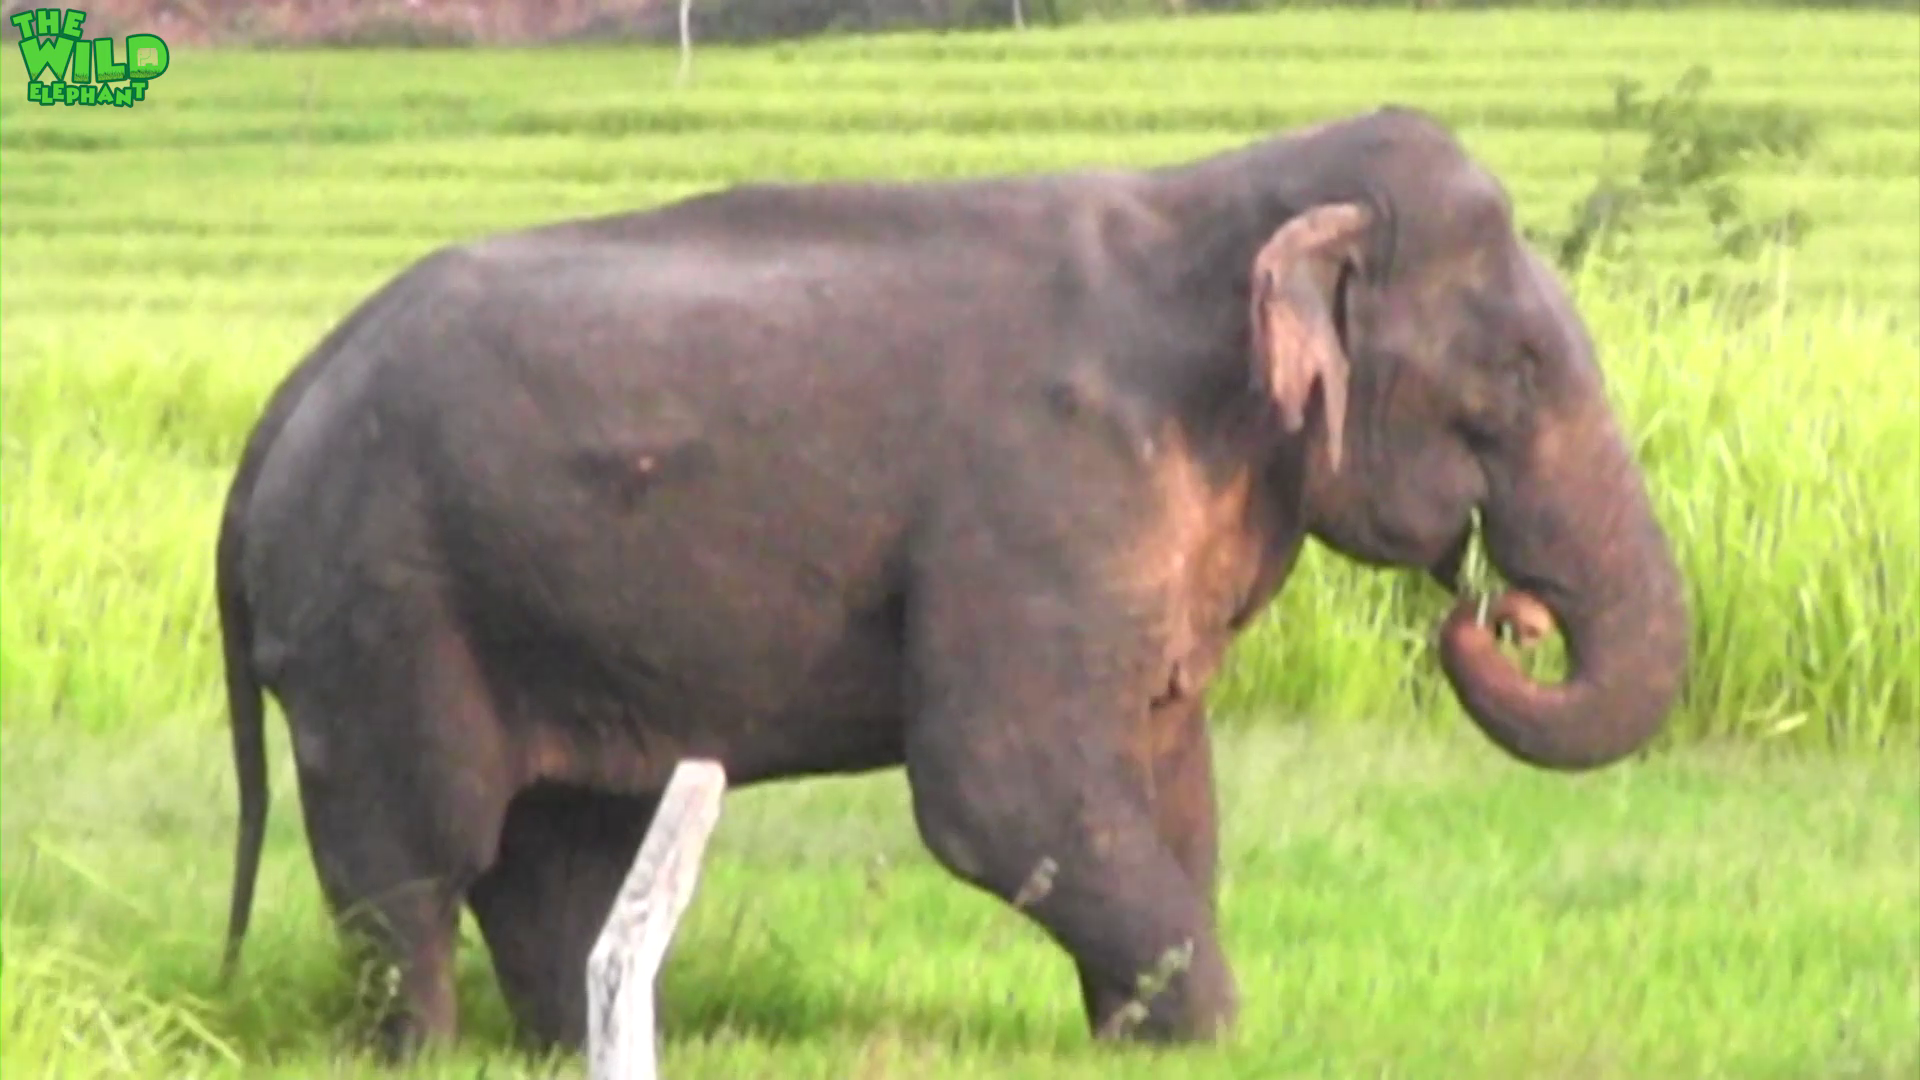 Playful elephant gets chased back to a safe jungle.